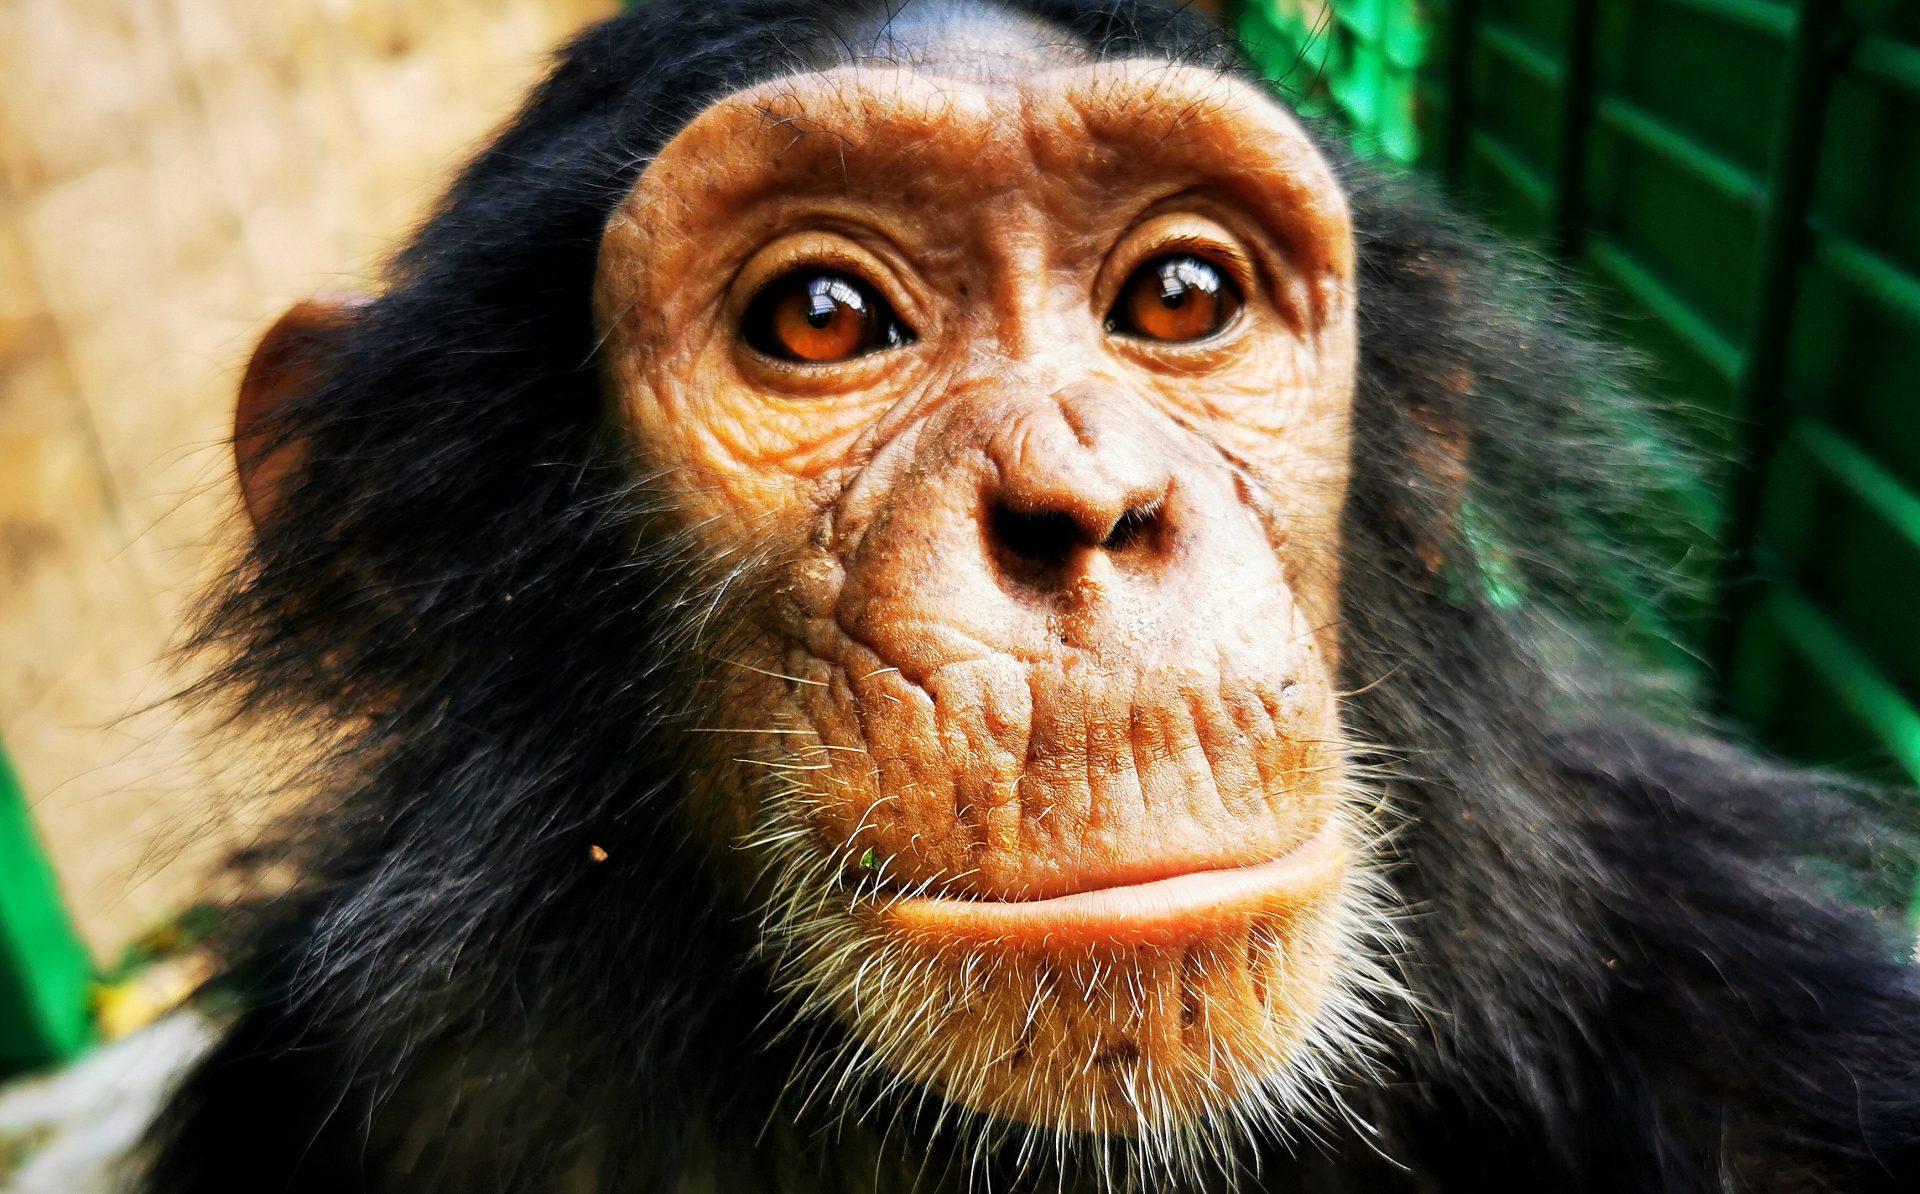 Tommy, baby chimp with osteomyelitis